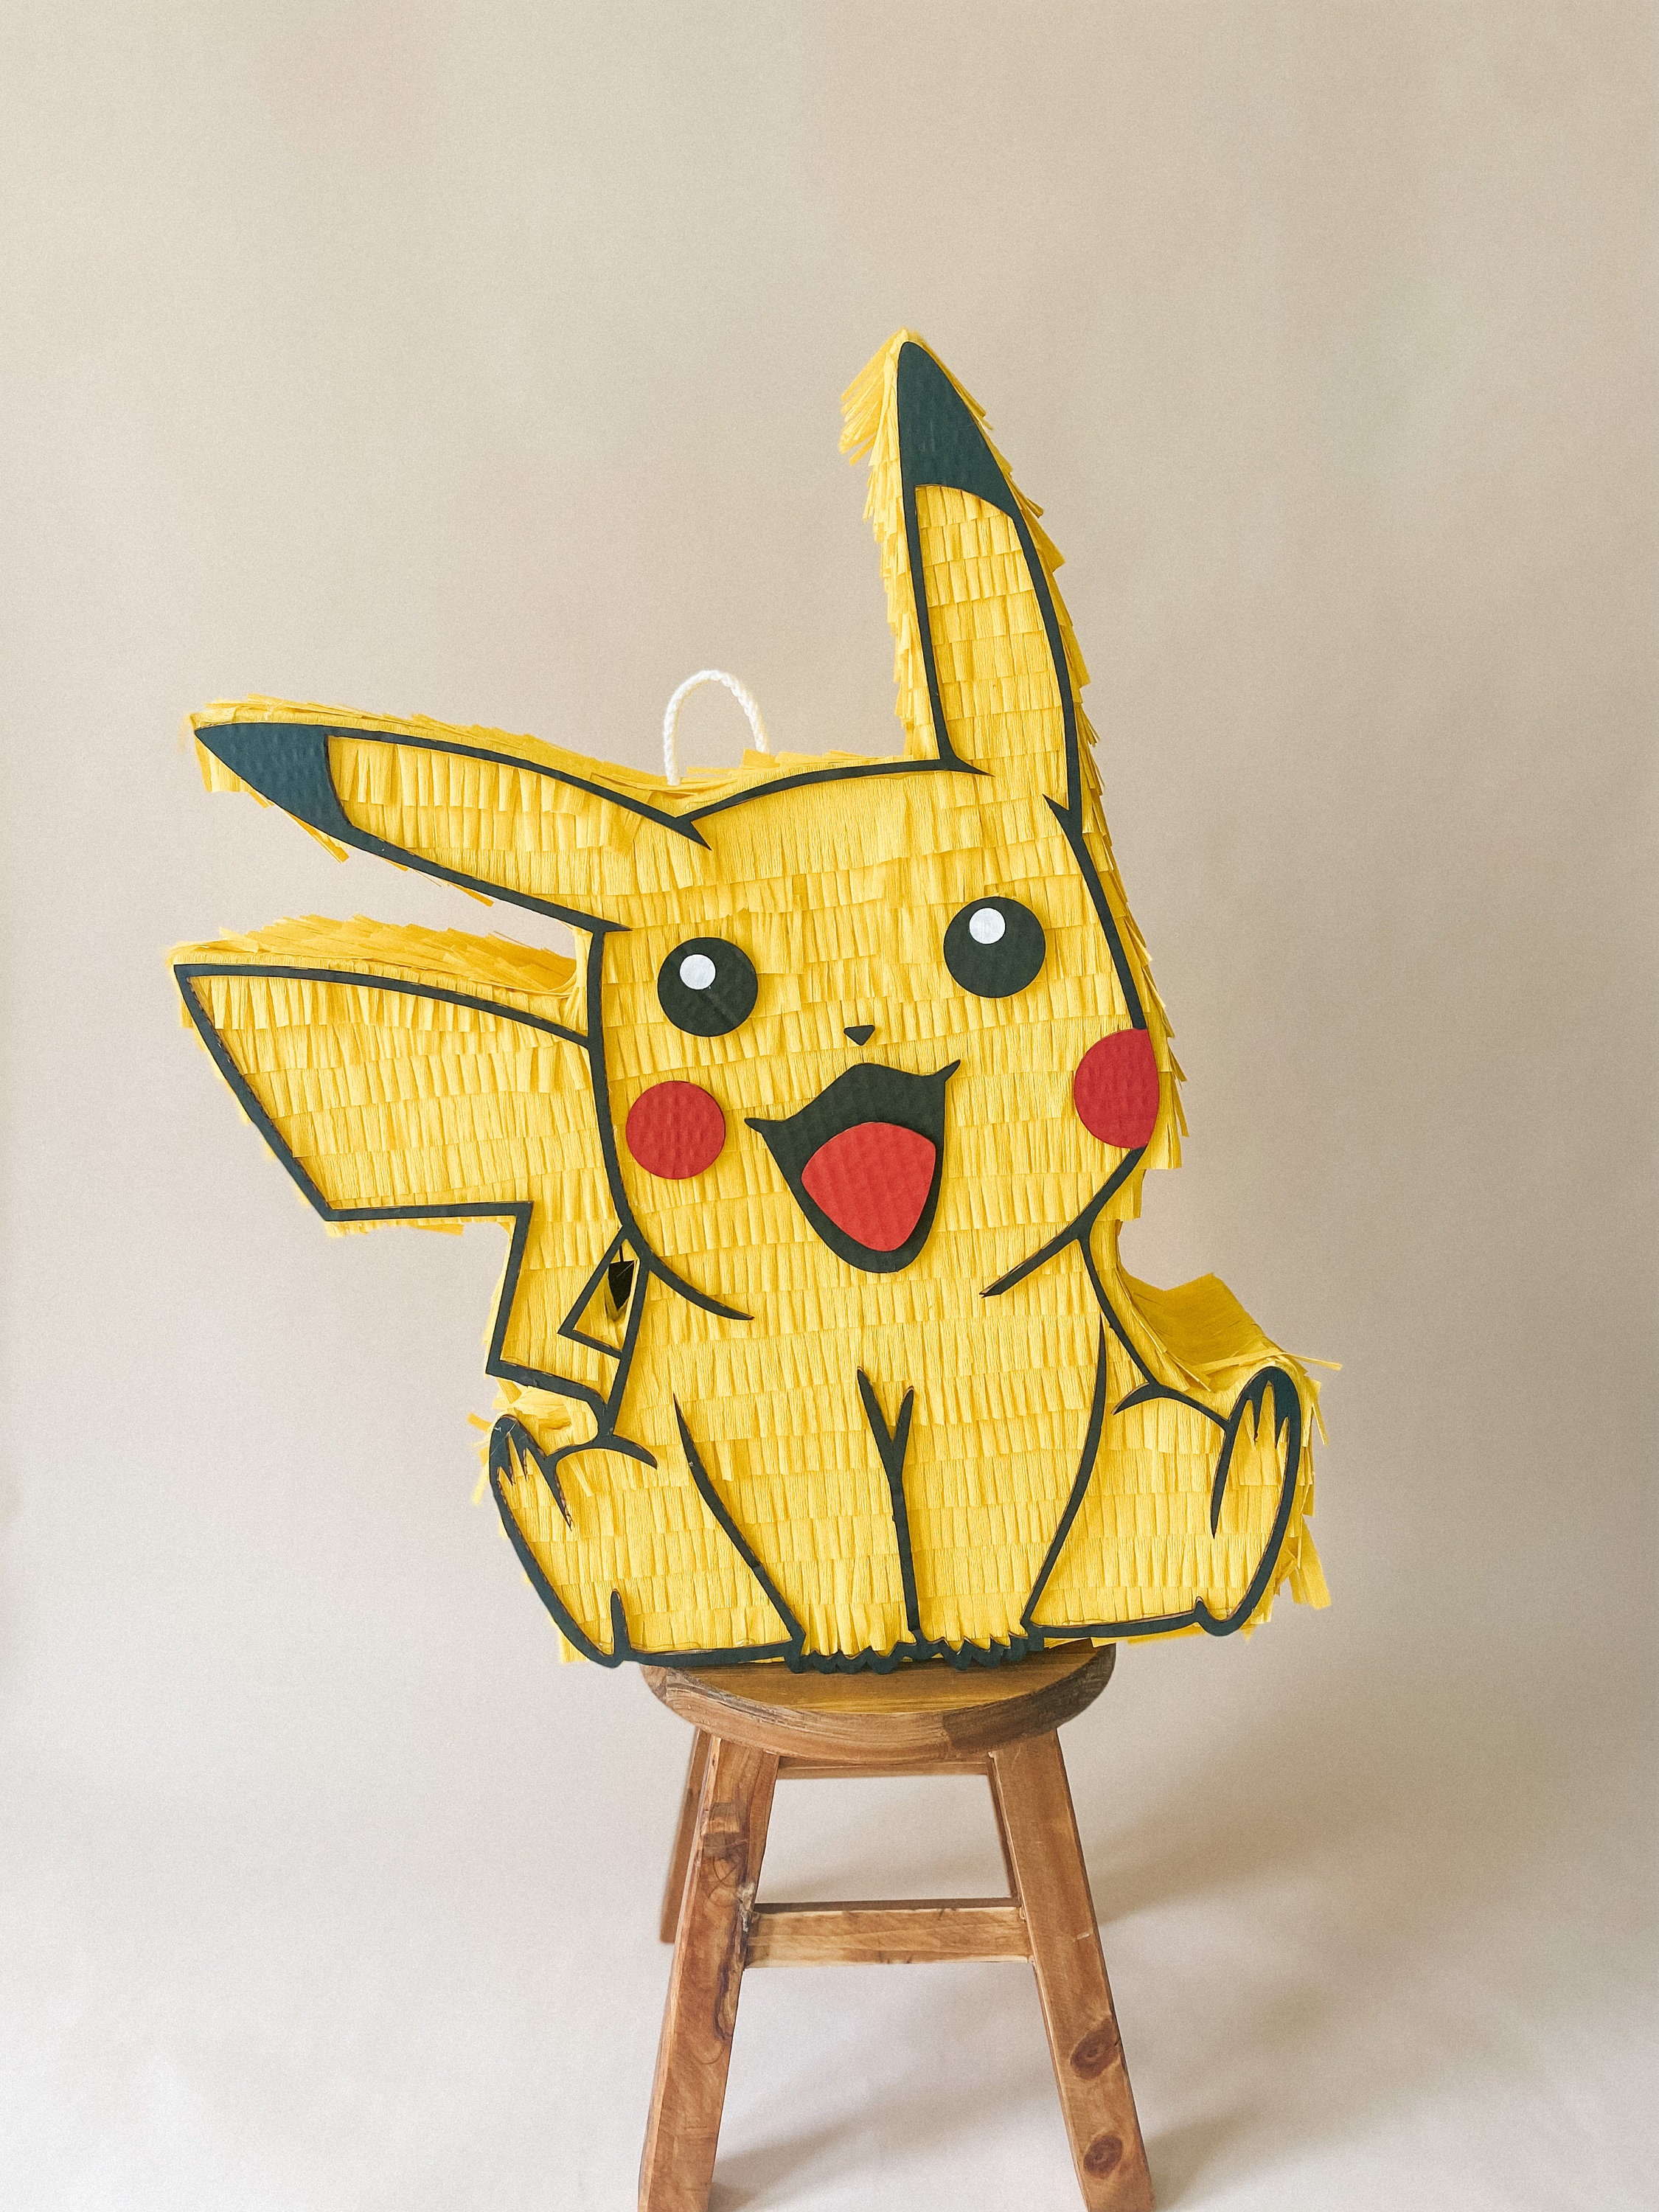 MALCREADO34401 Piñata Pokemon go - Pikachu - Cumpleaños